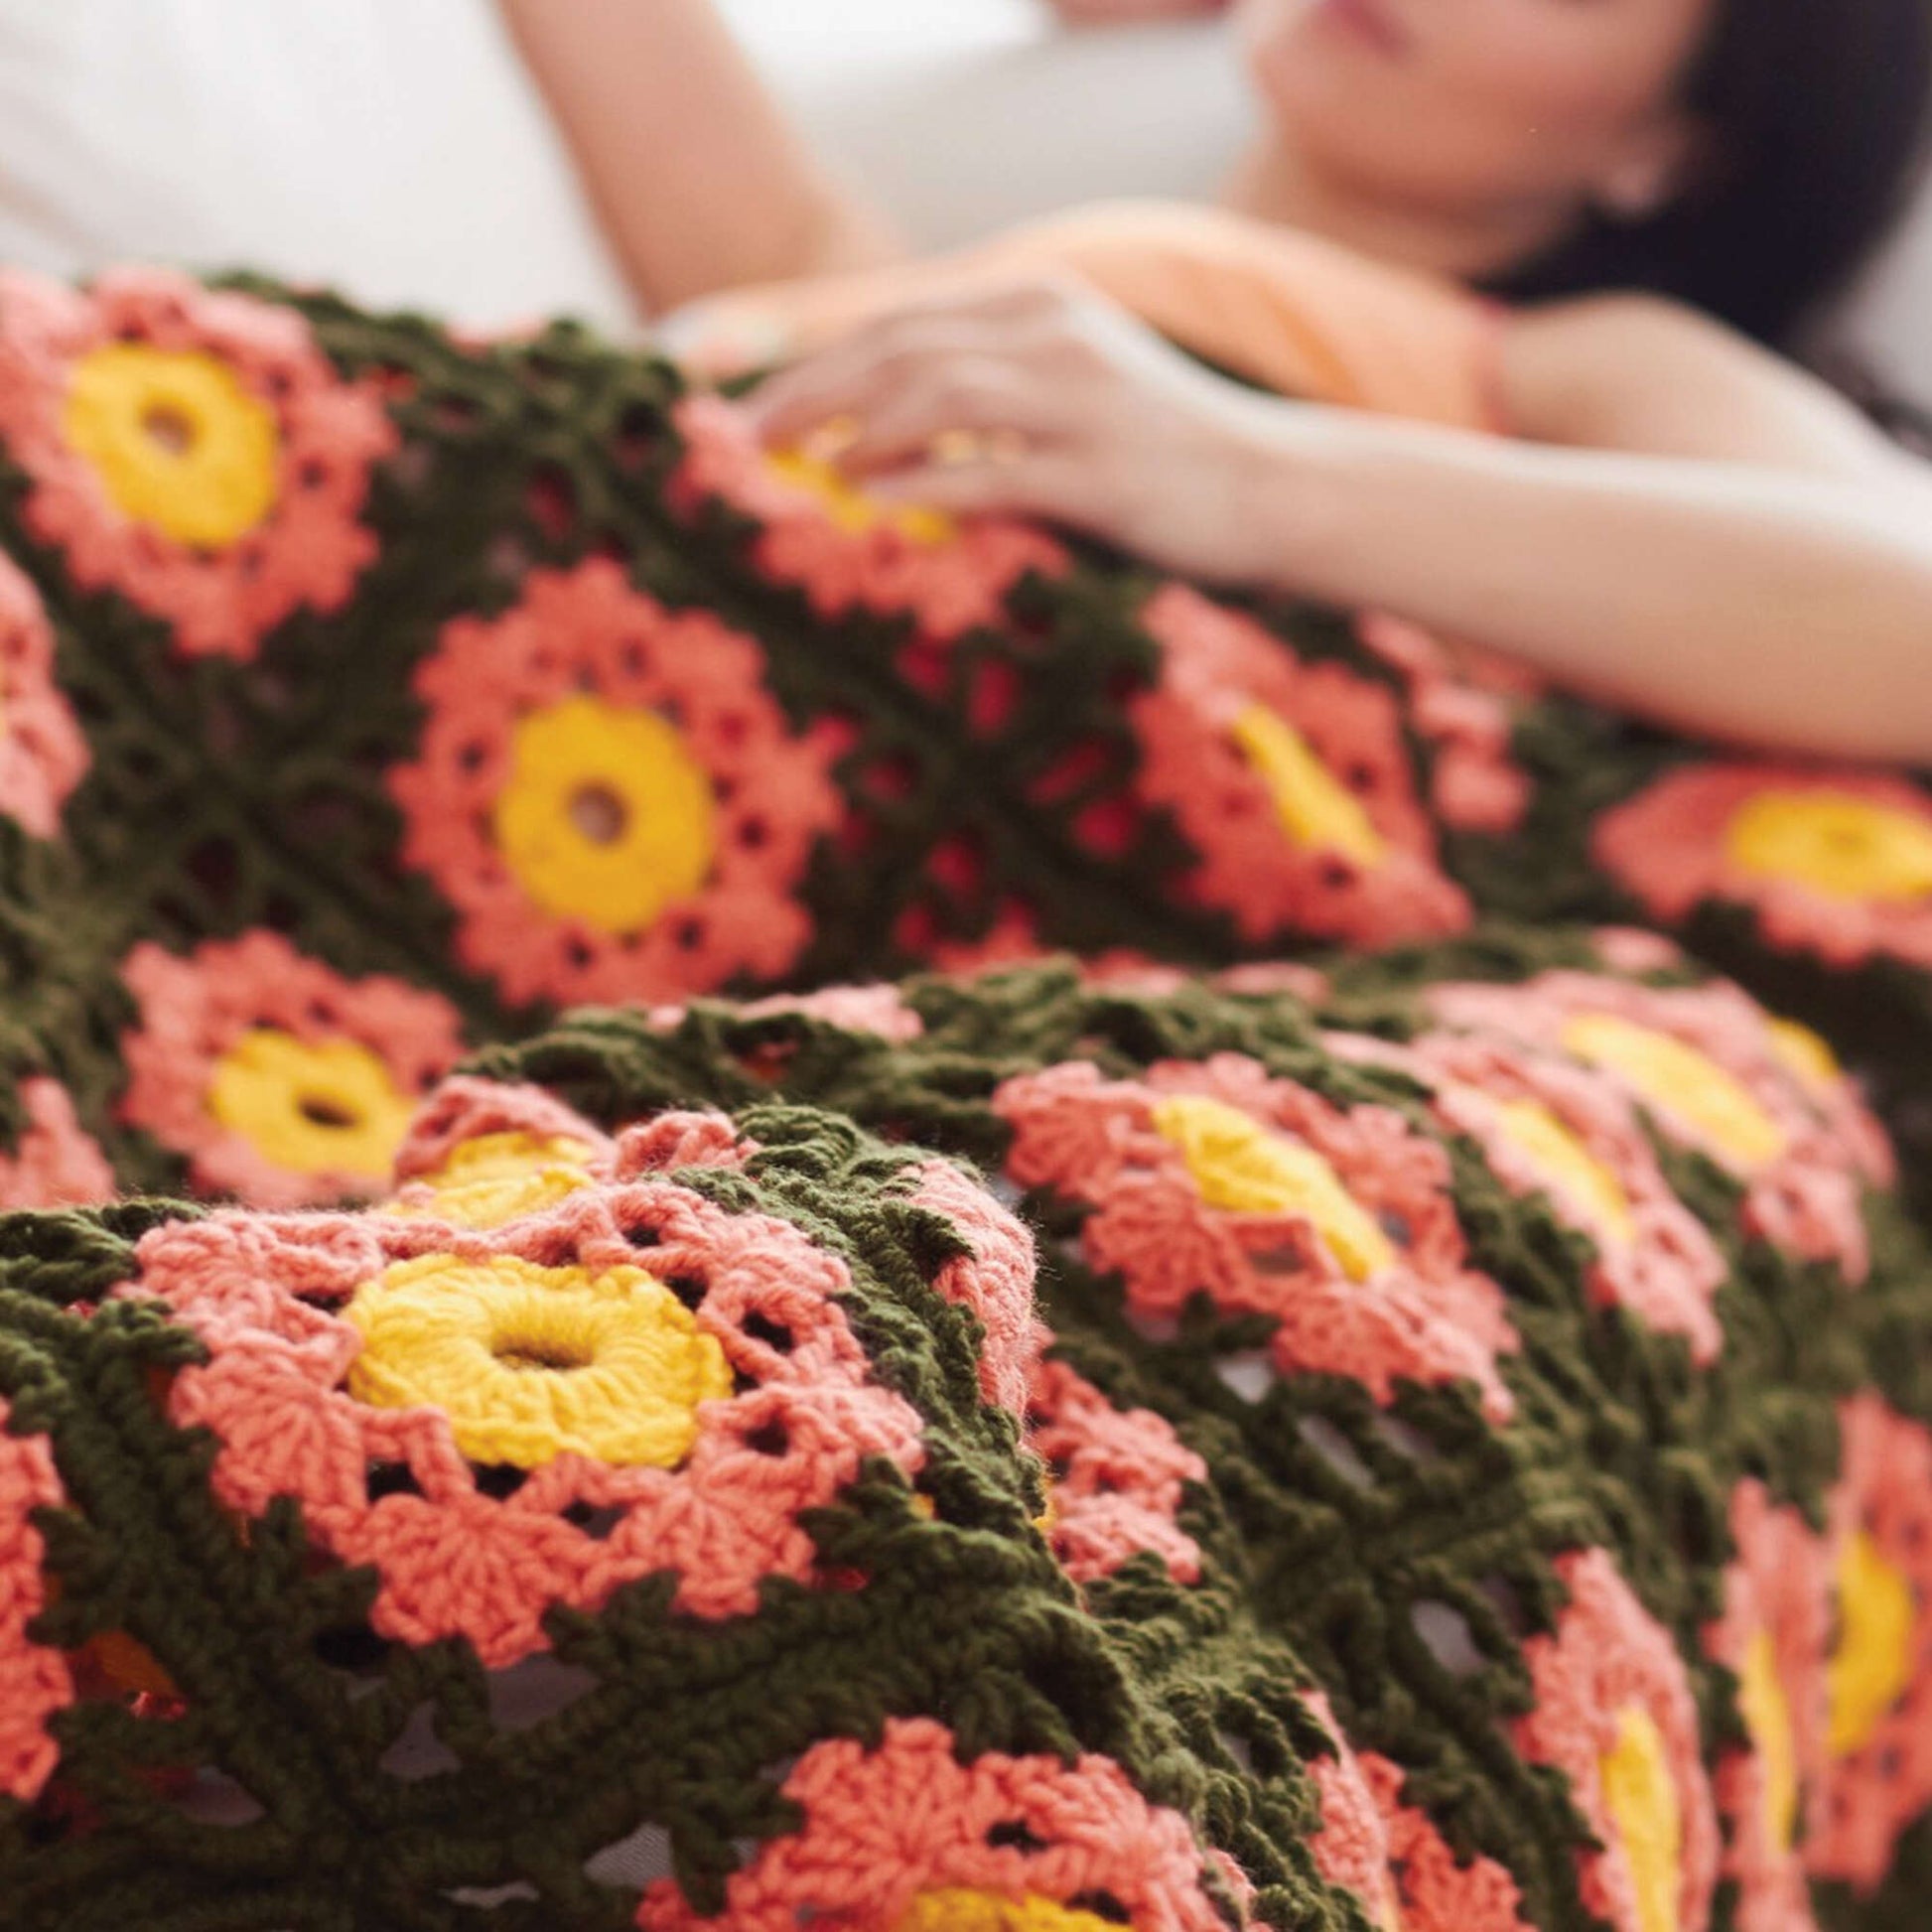 Free Caron Crochet Garden Flowers Throw Pattern